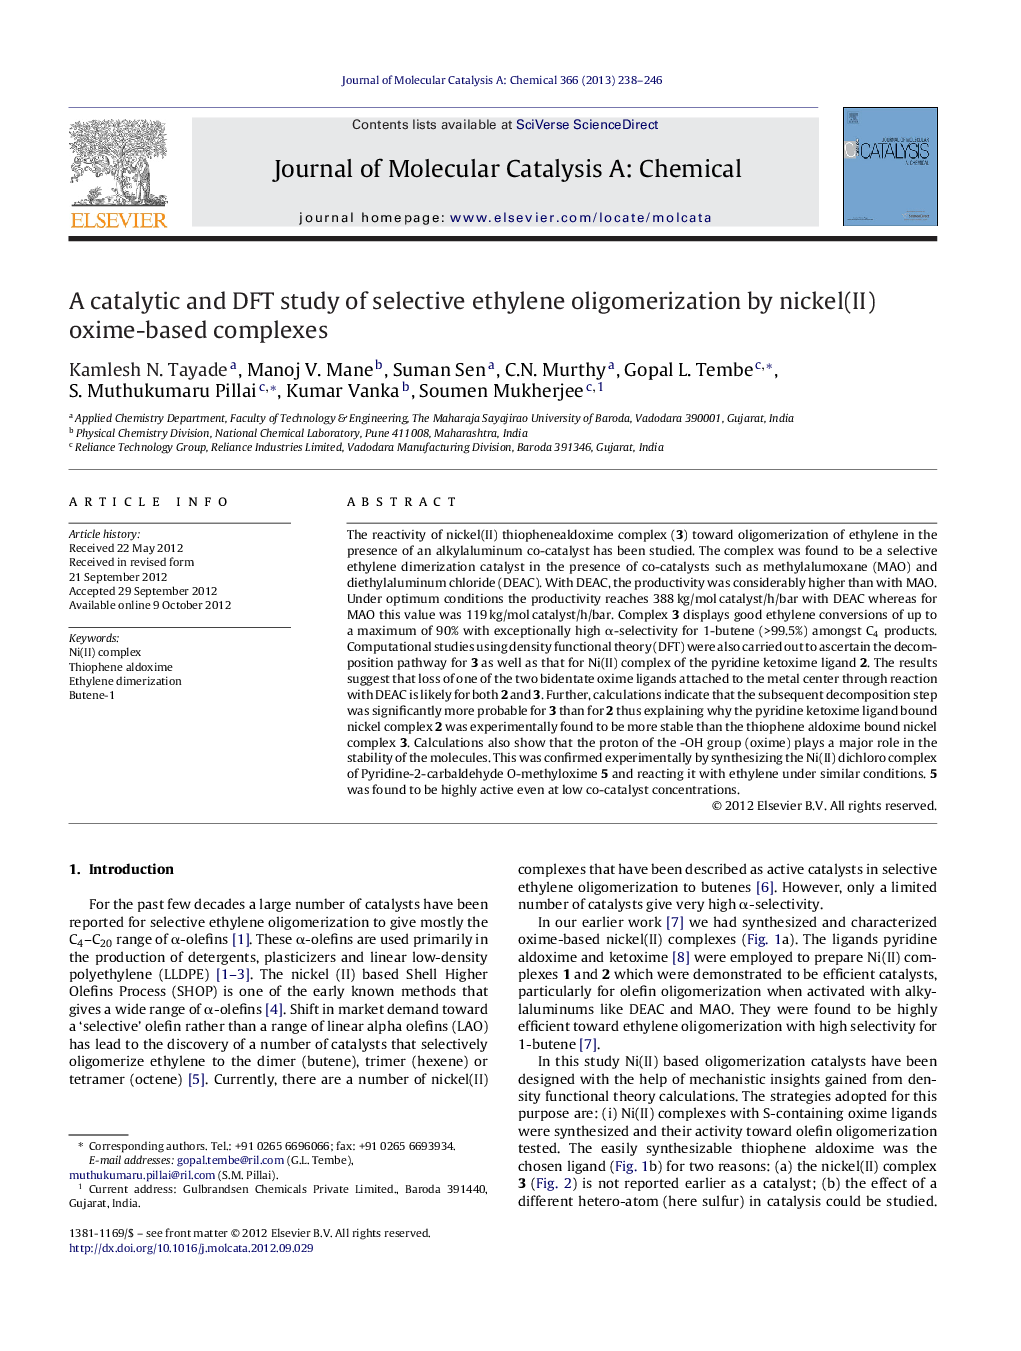 A catalytic and DFT study of selective ethylene oligomerization by nickel(II) oxime-based complexes